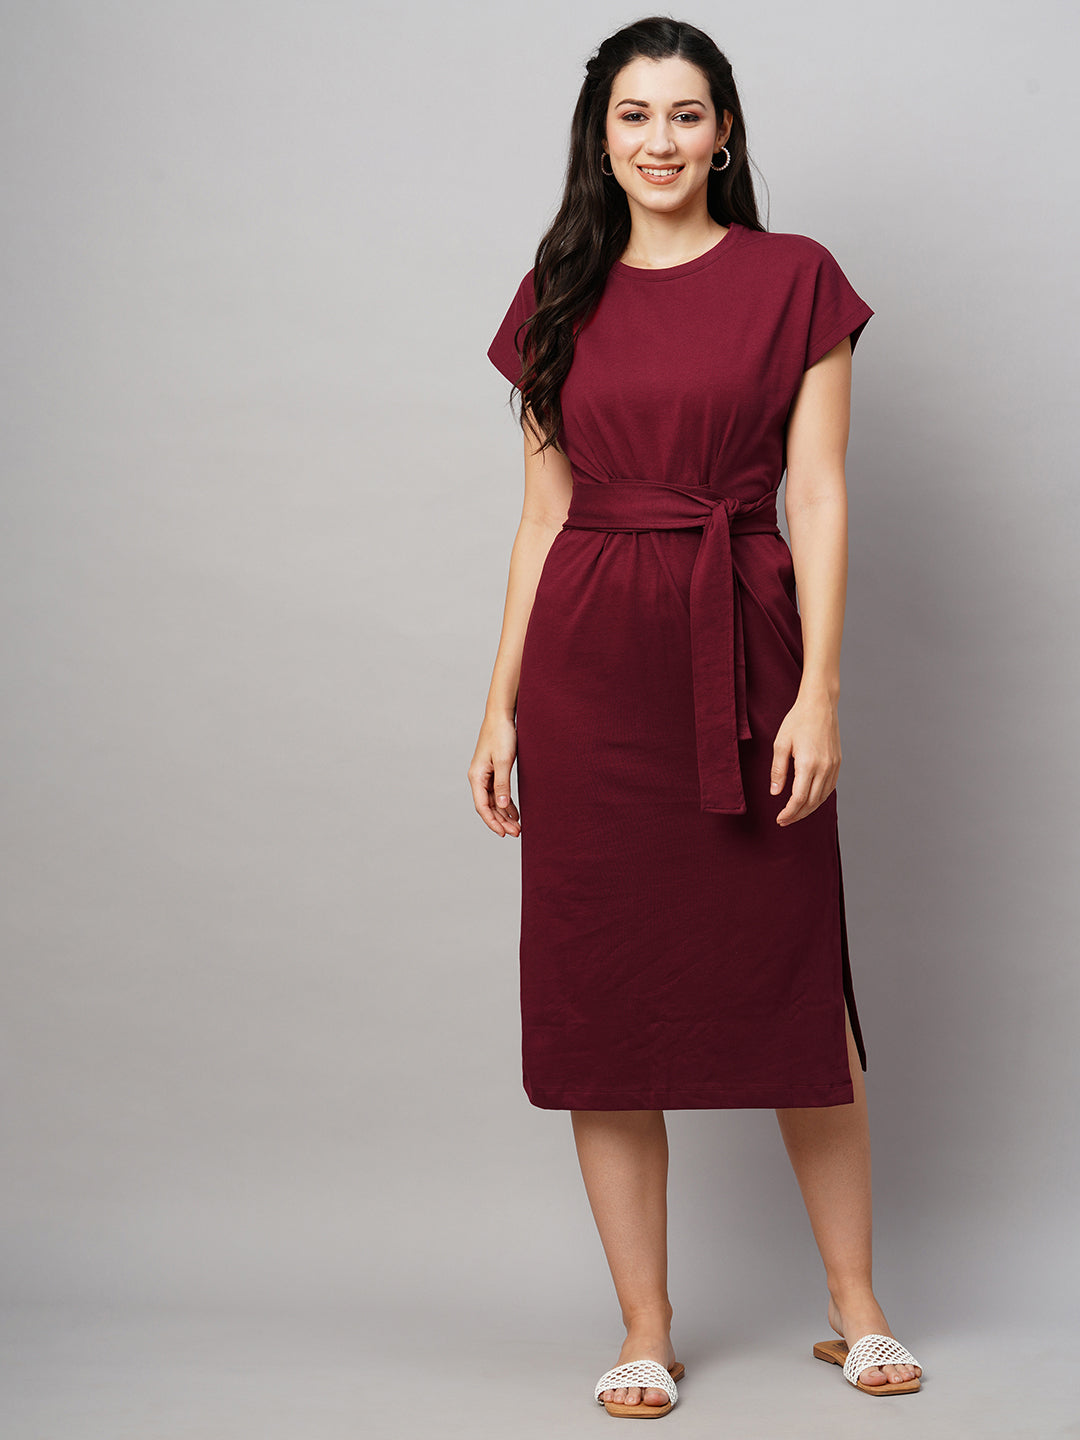 Women's Cotton Dark Red Regular Fit Knit Dress